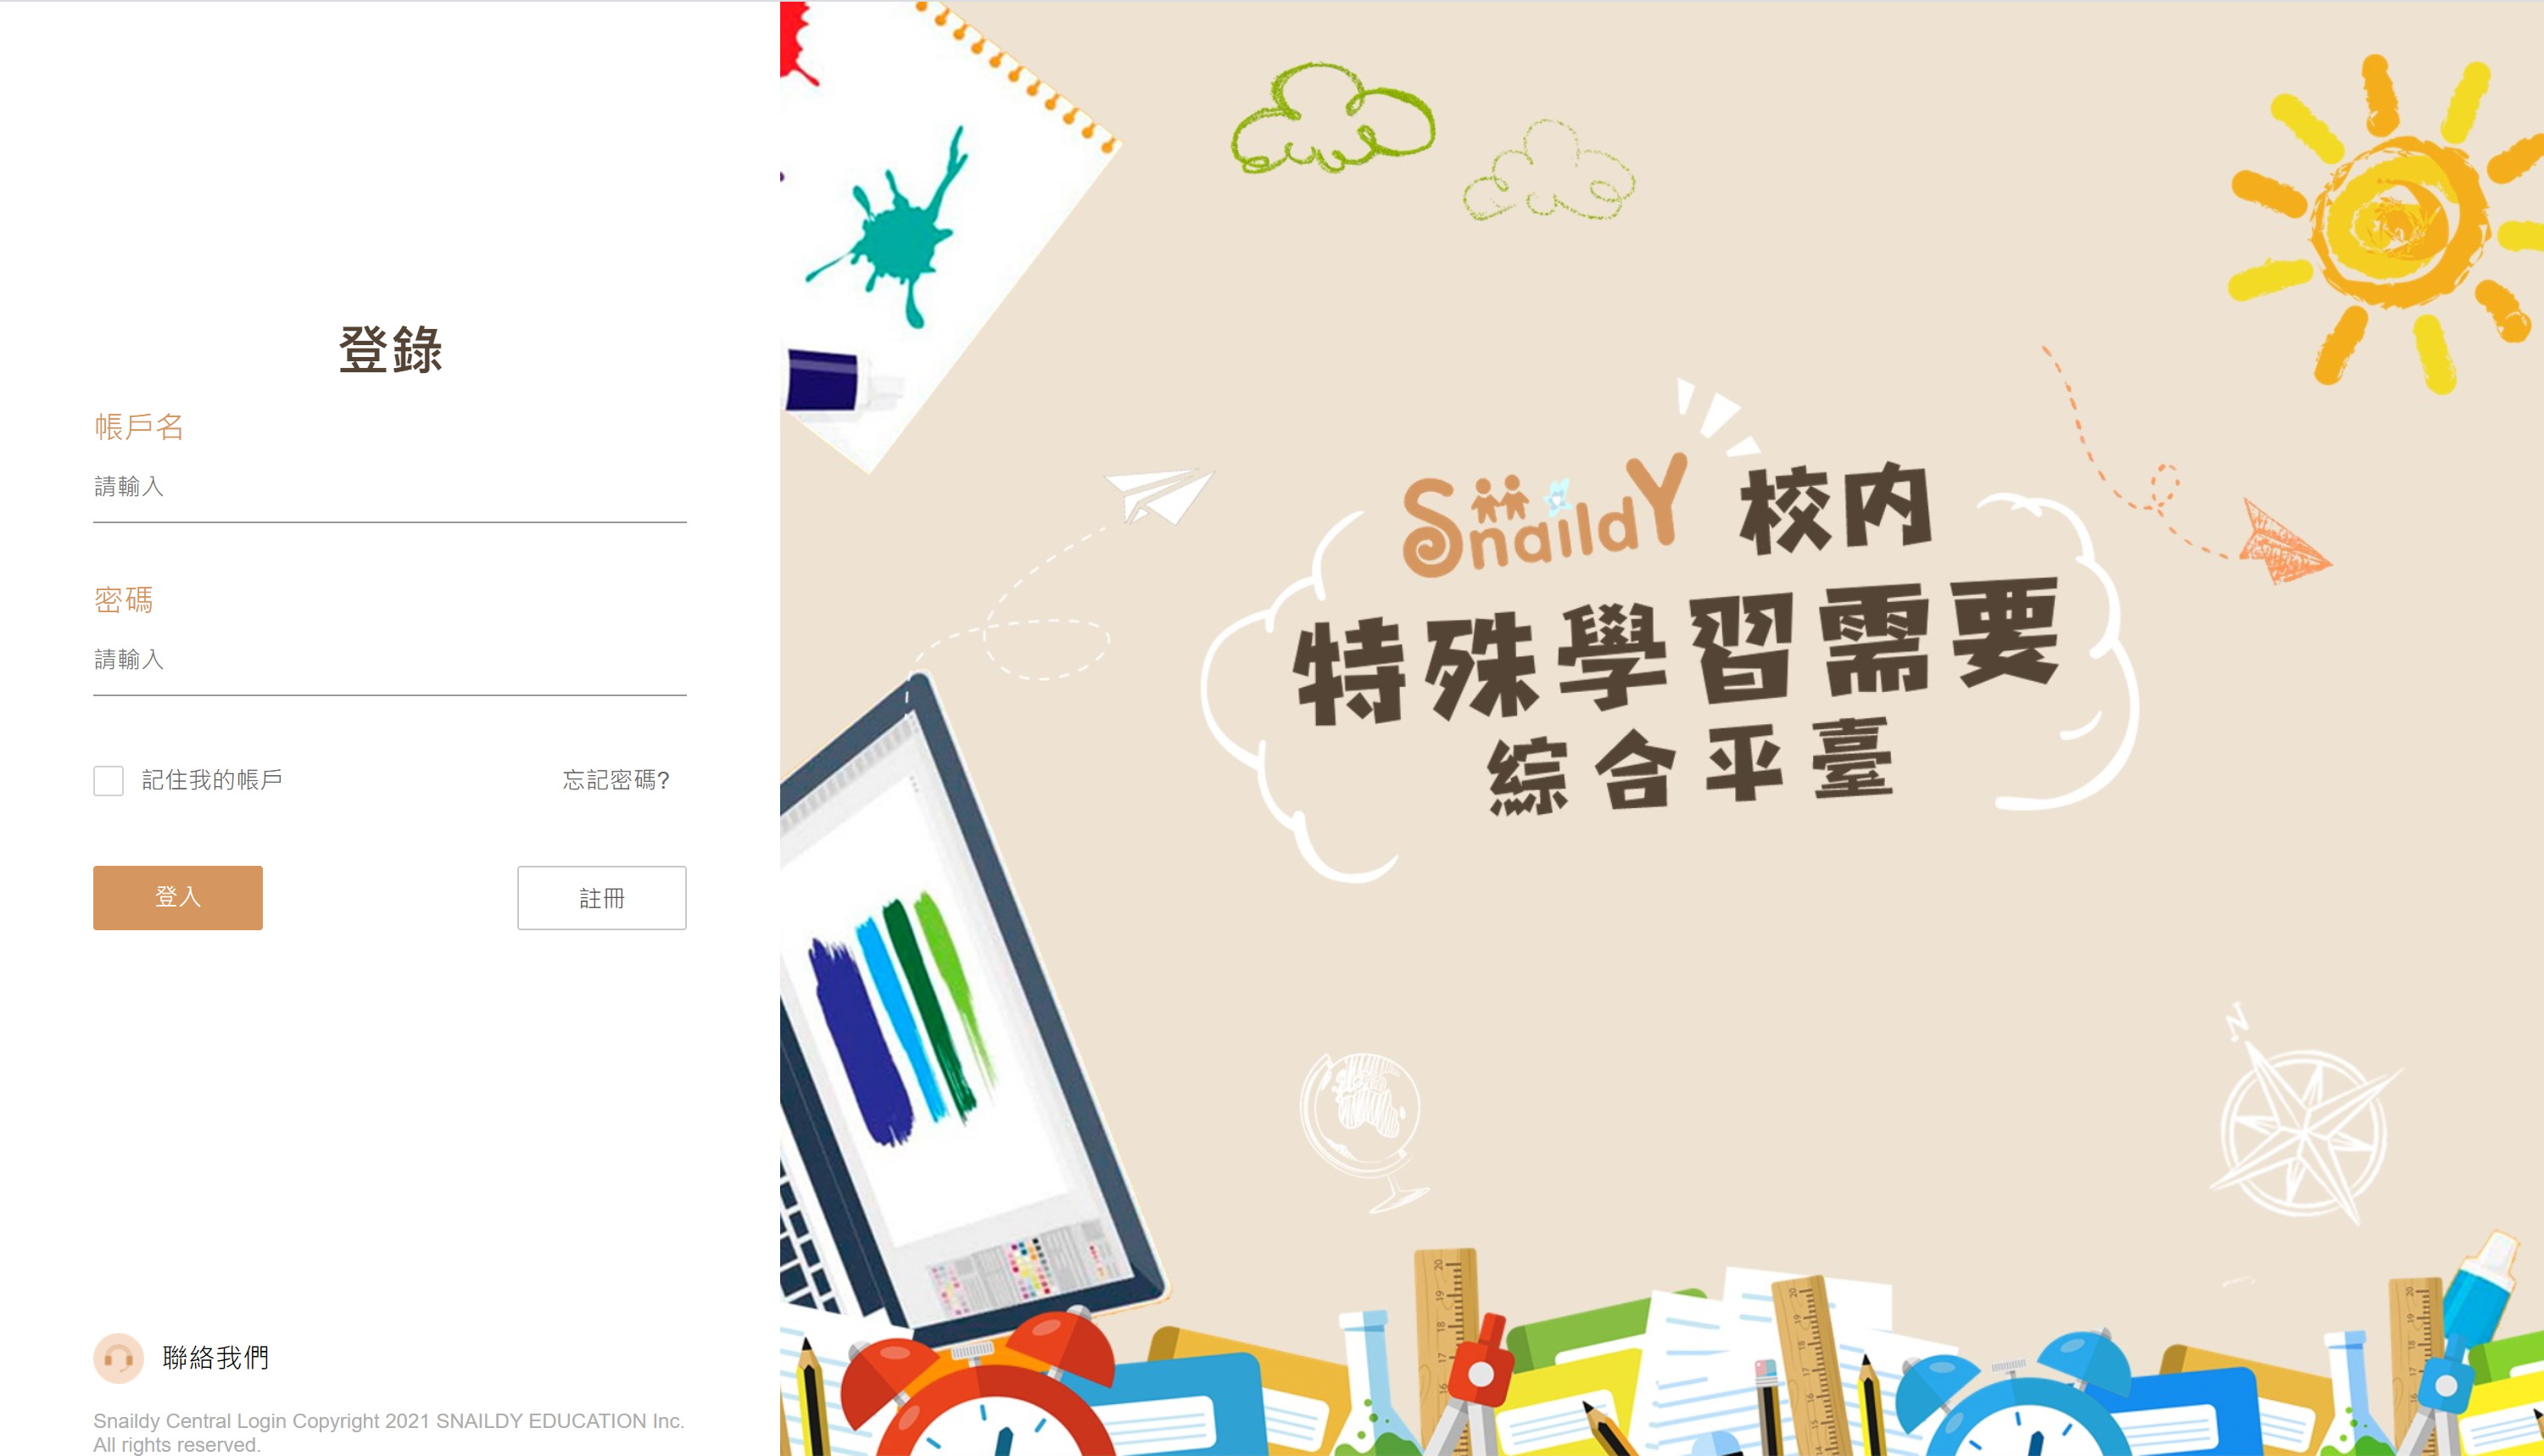 SNAILDY是雲端平台，方便教職員透過瀏覽器快速搜索或更新SEN學生資料。（受訪者提供圖片）